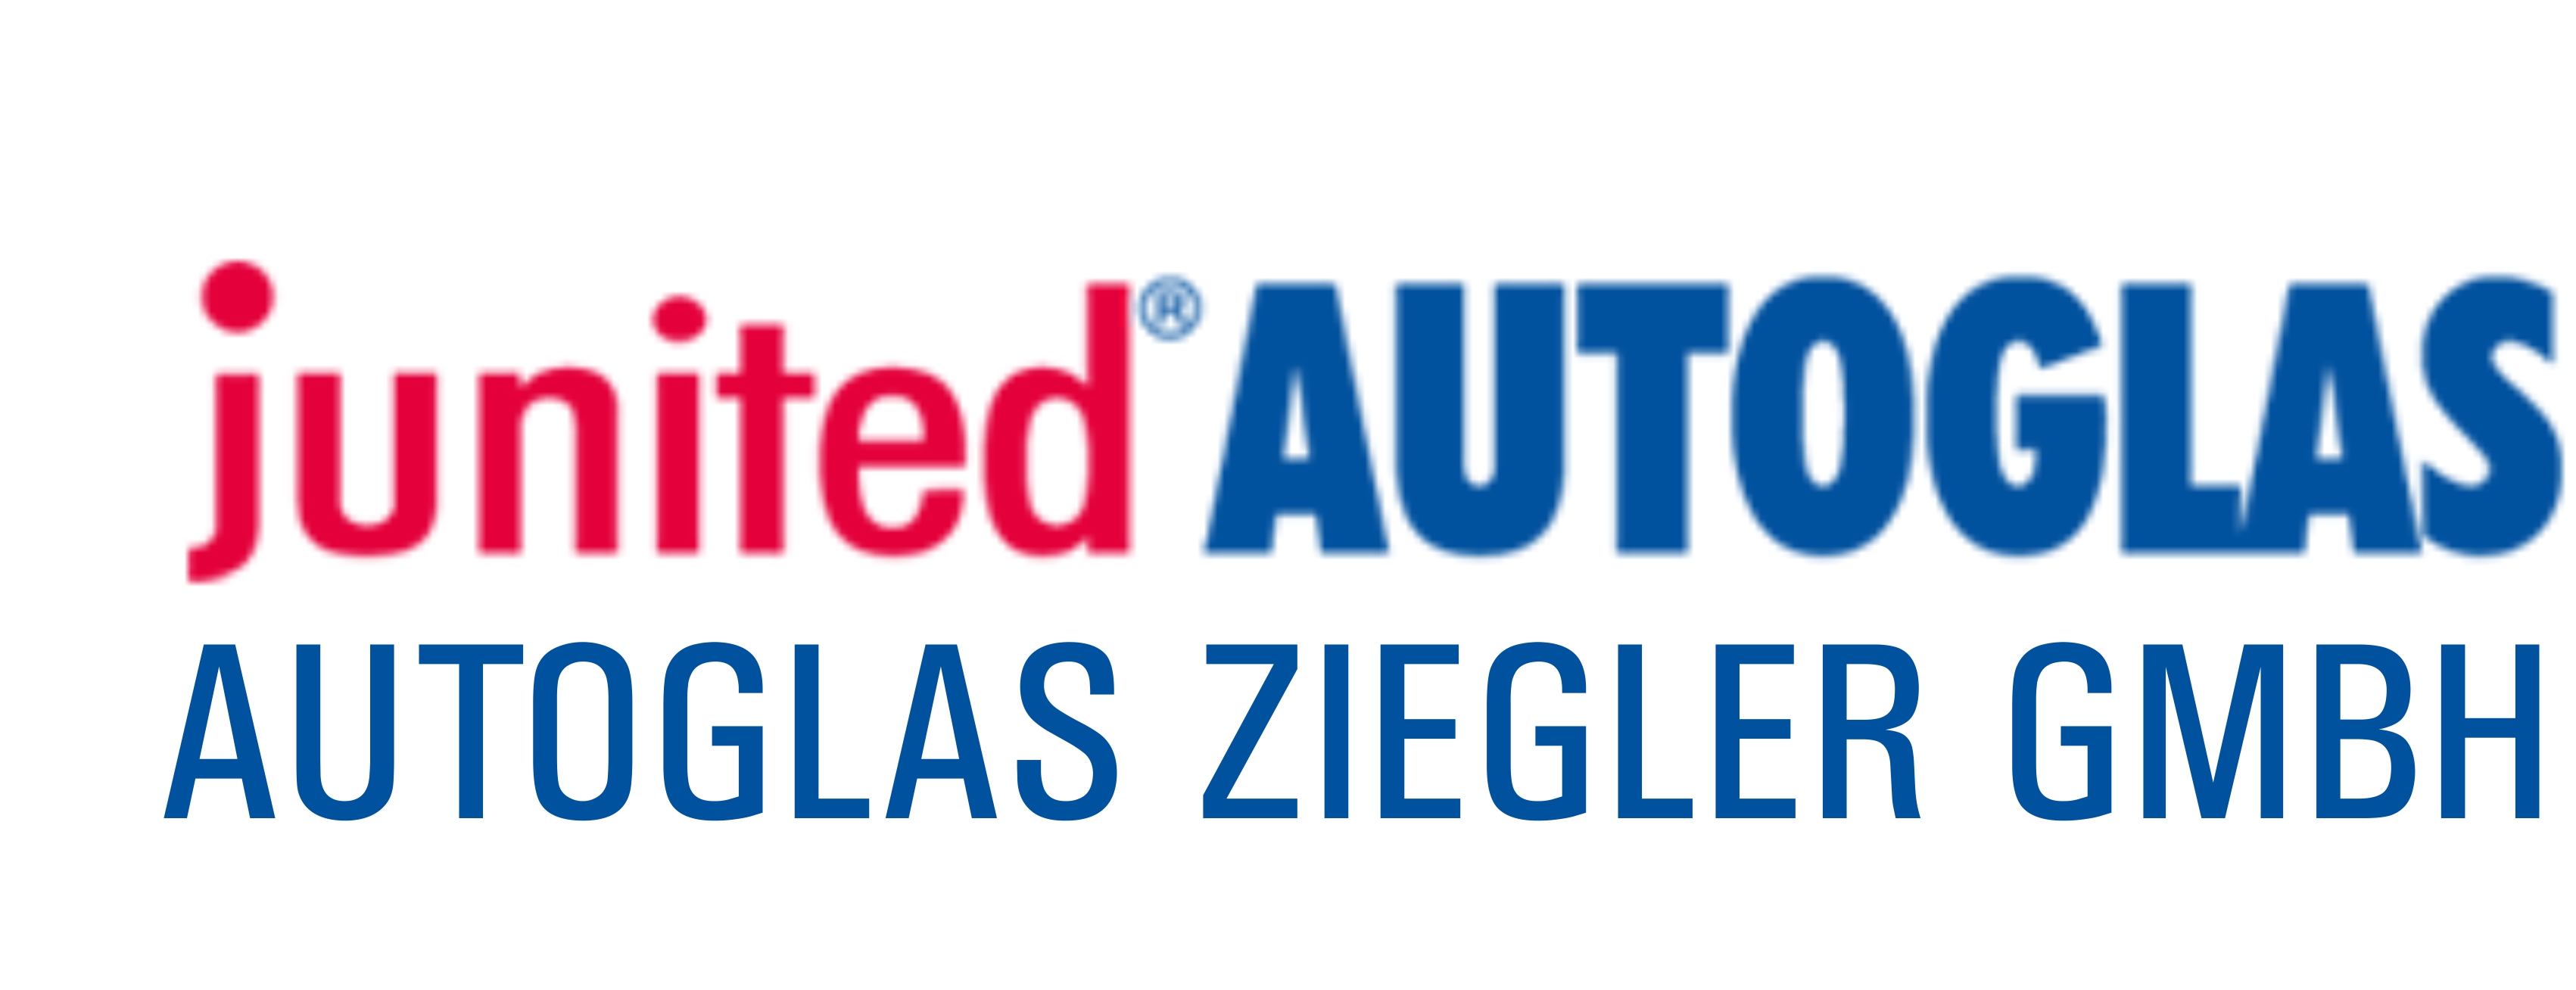 Autoglas Ziegler GmbH logo